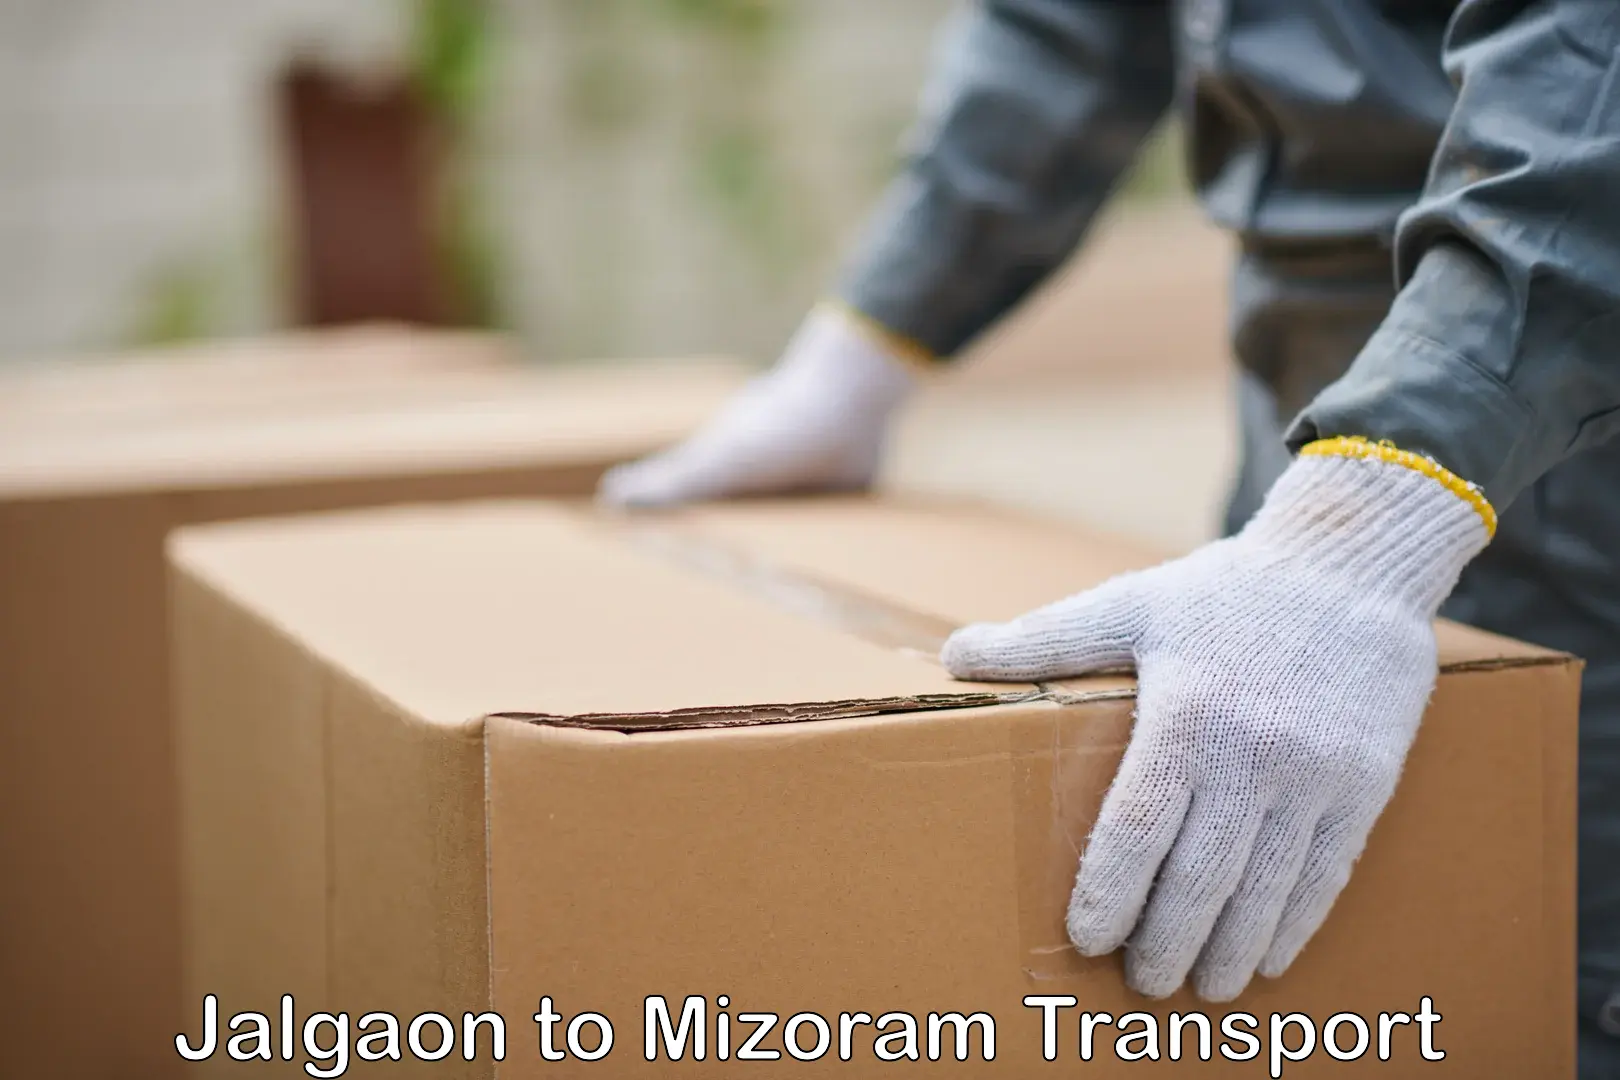 Delivery service Jalgaon to Mizoram